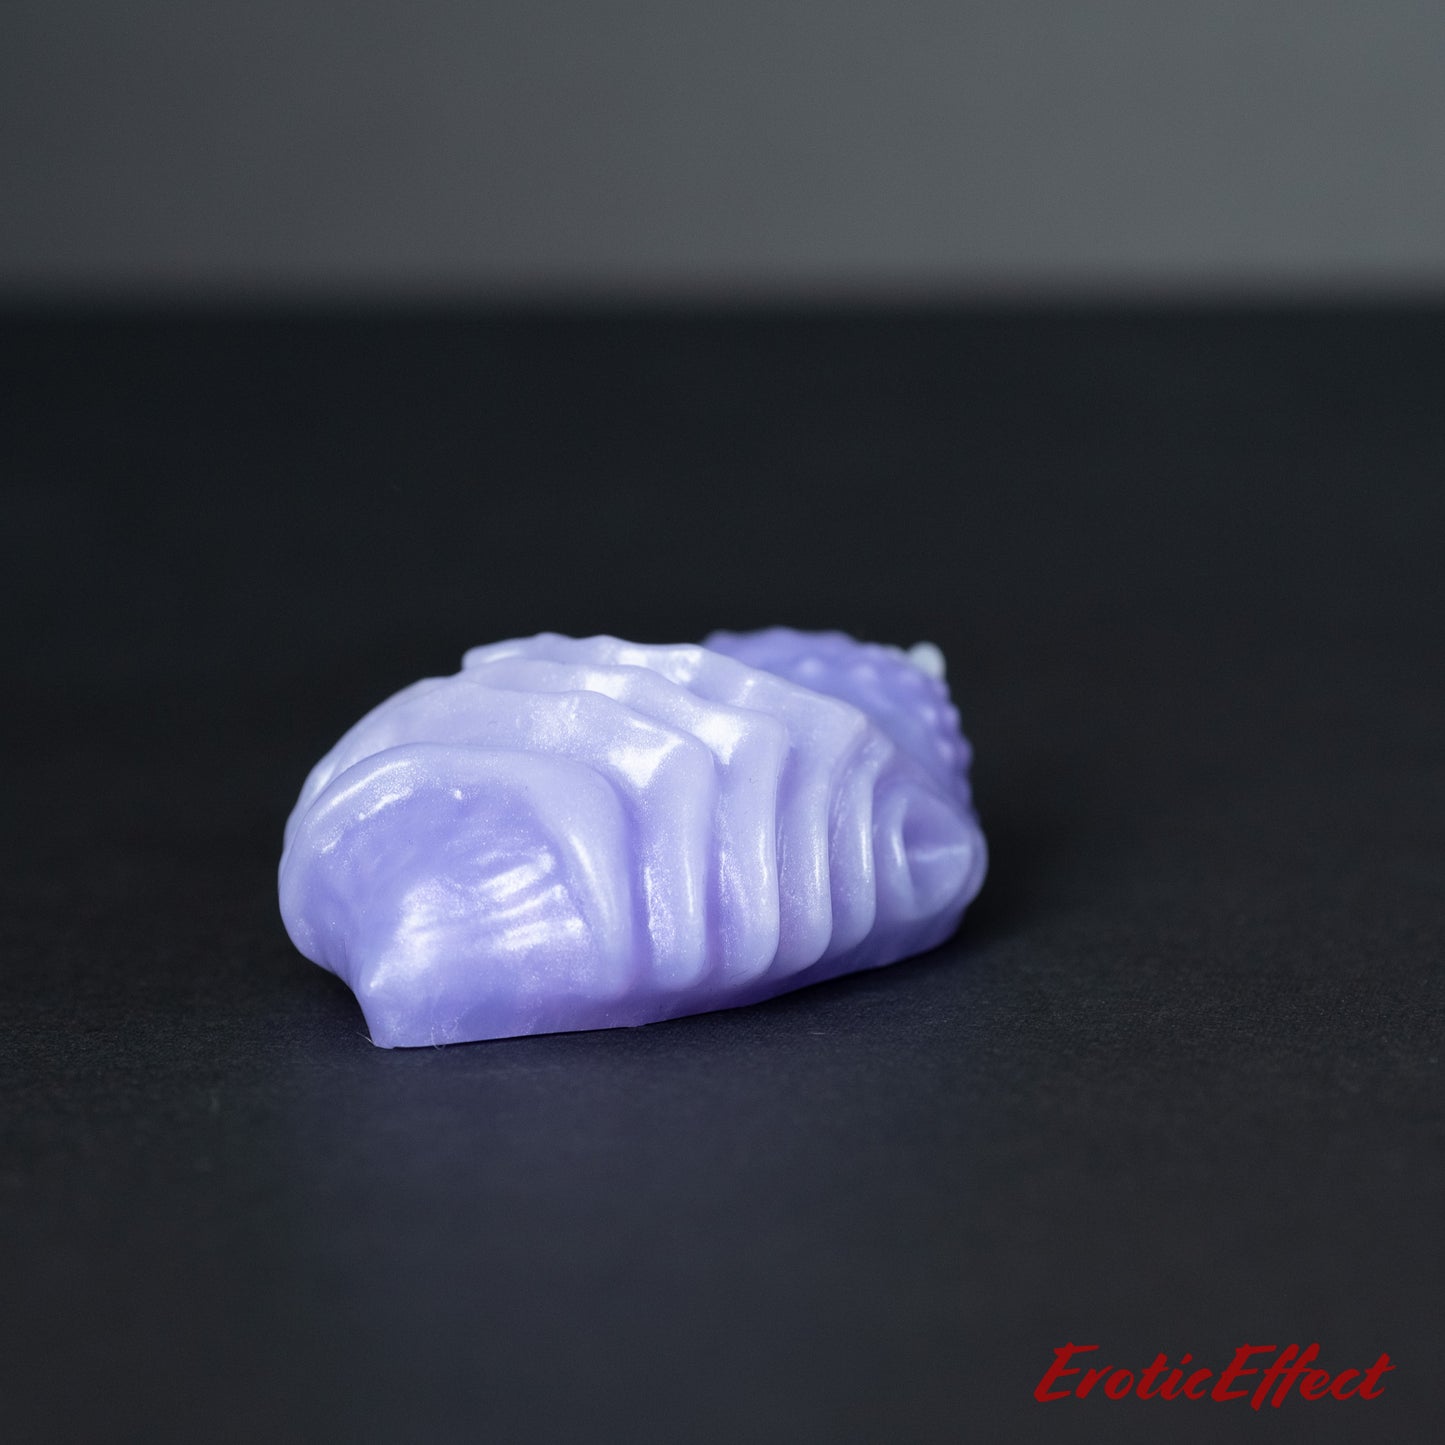 Edgar Silicone Grindable/Squishy - Medium Firmness - Lavender Shimmer